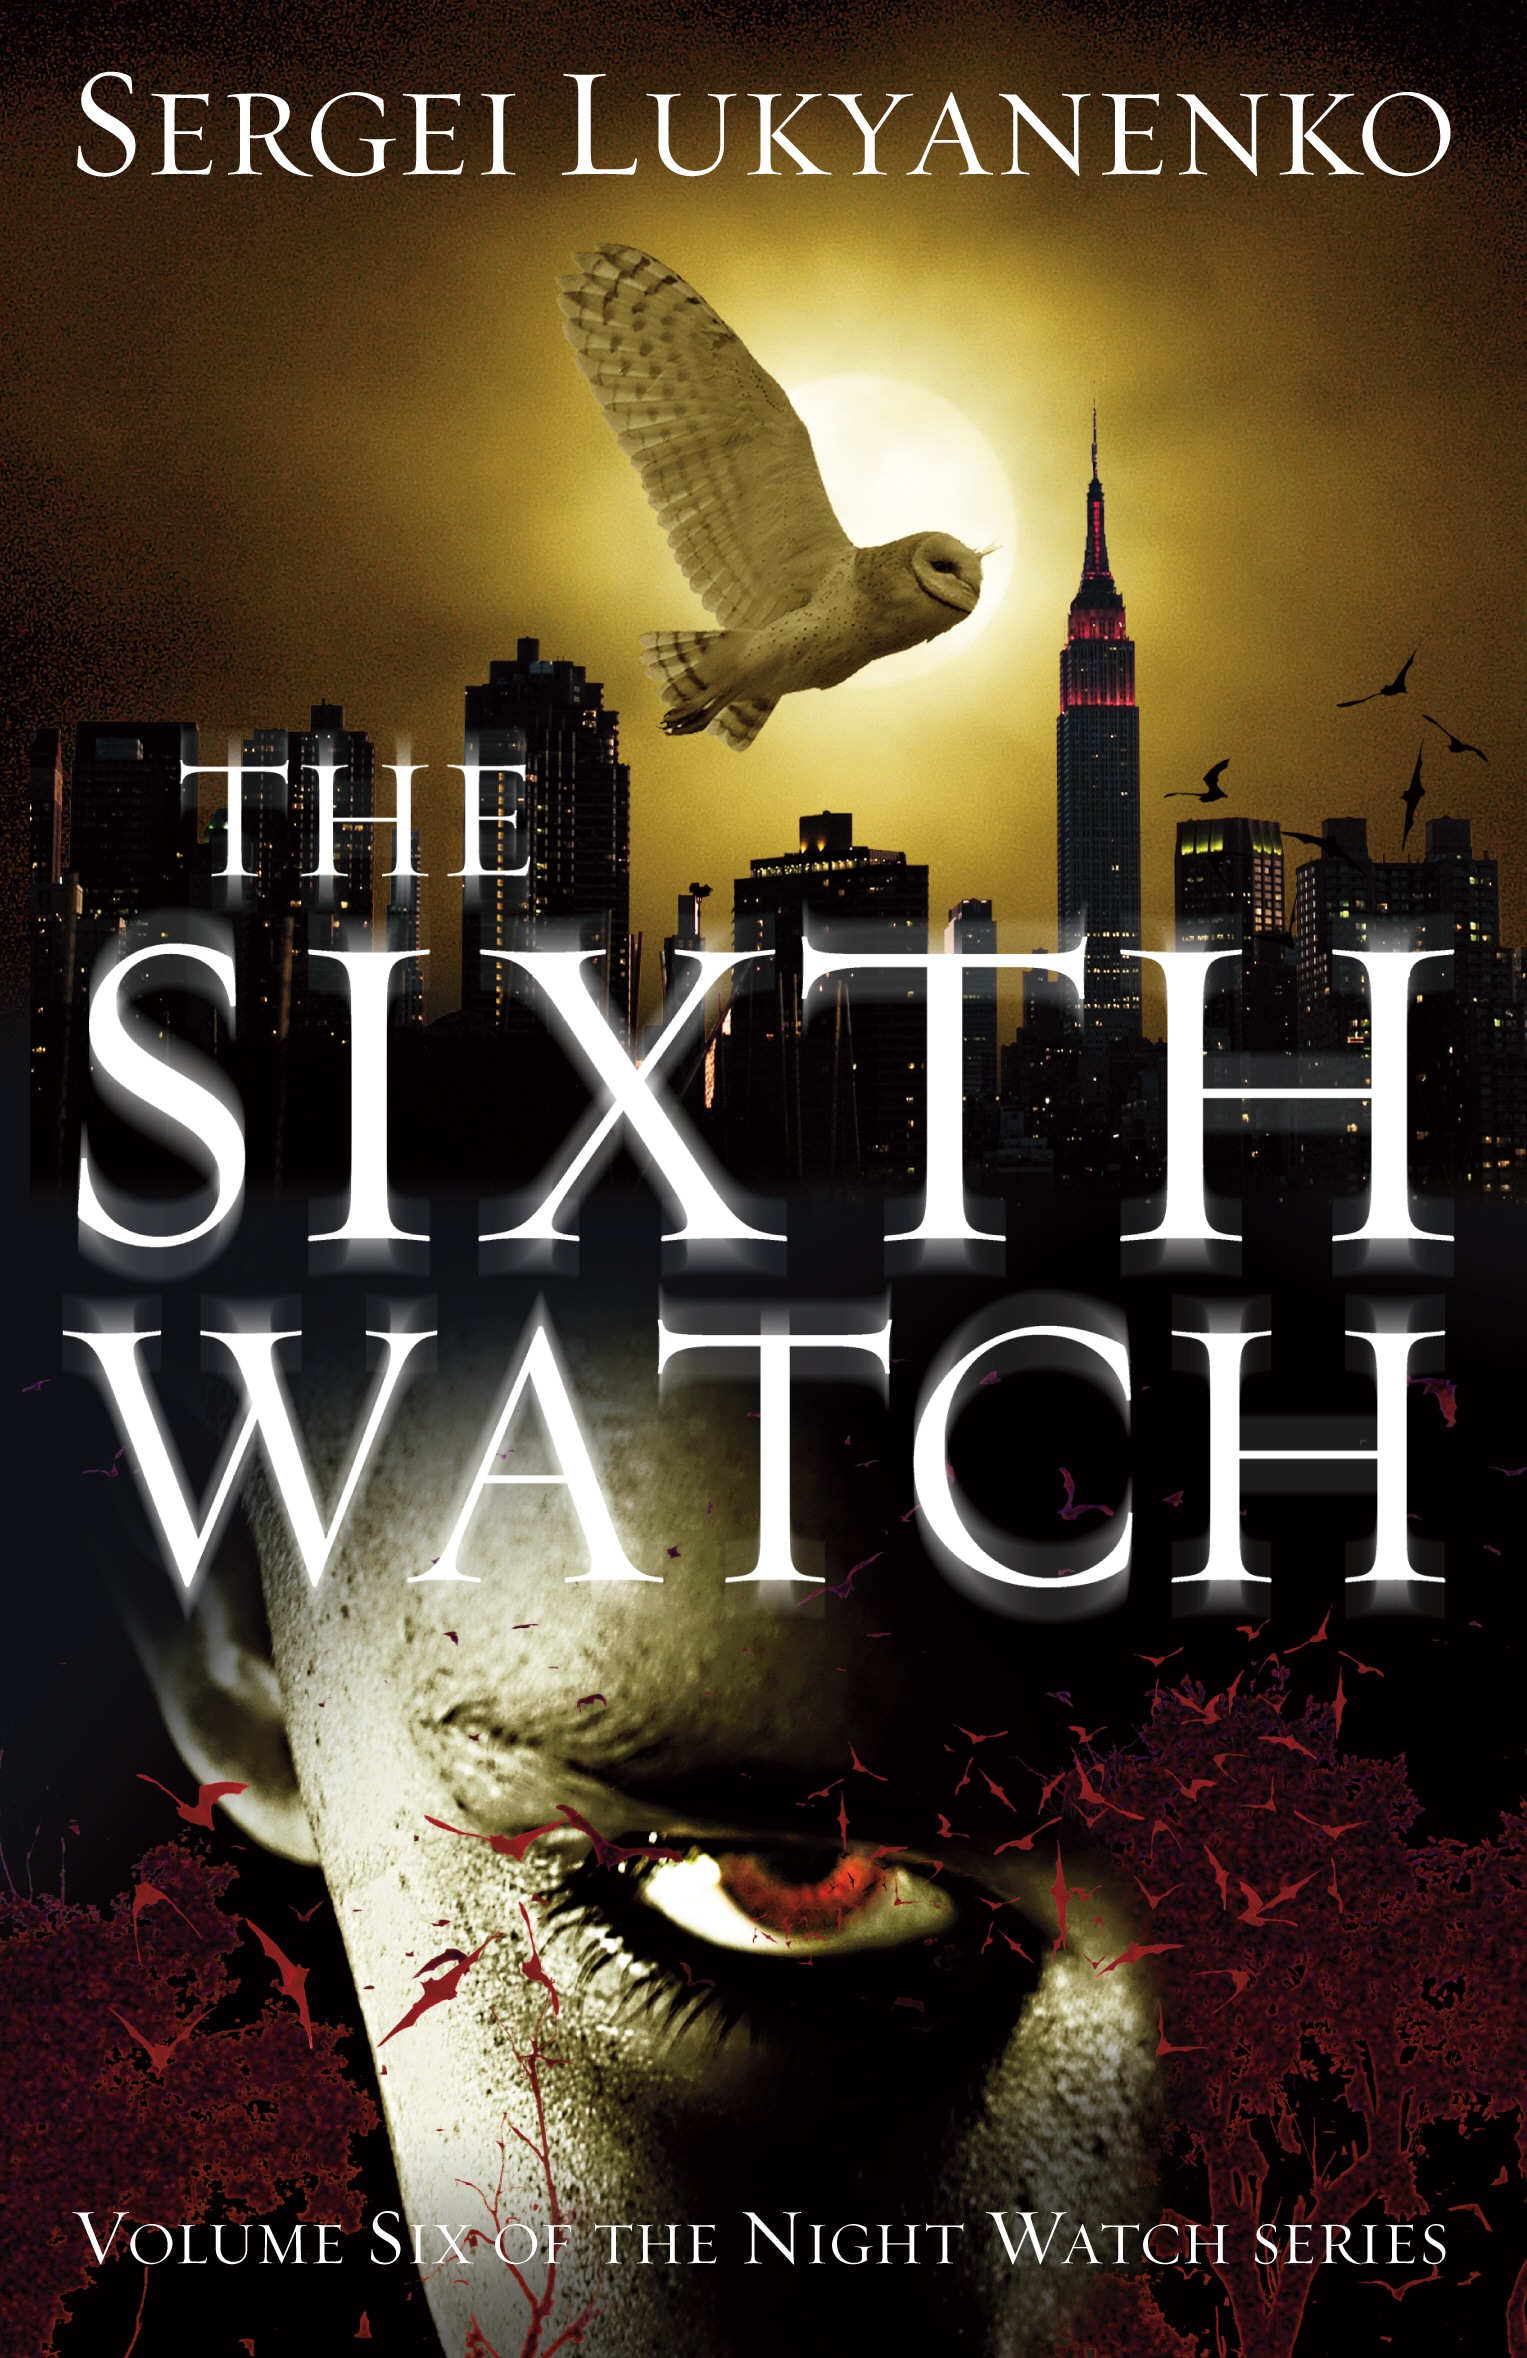 Book “The Sixth Watch” by Sergei Lukyanenko — September 7, 2017